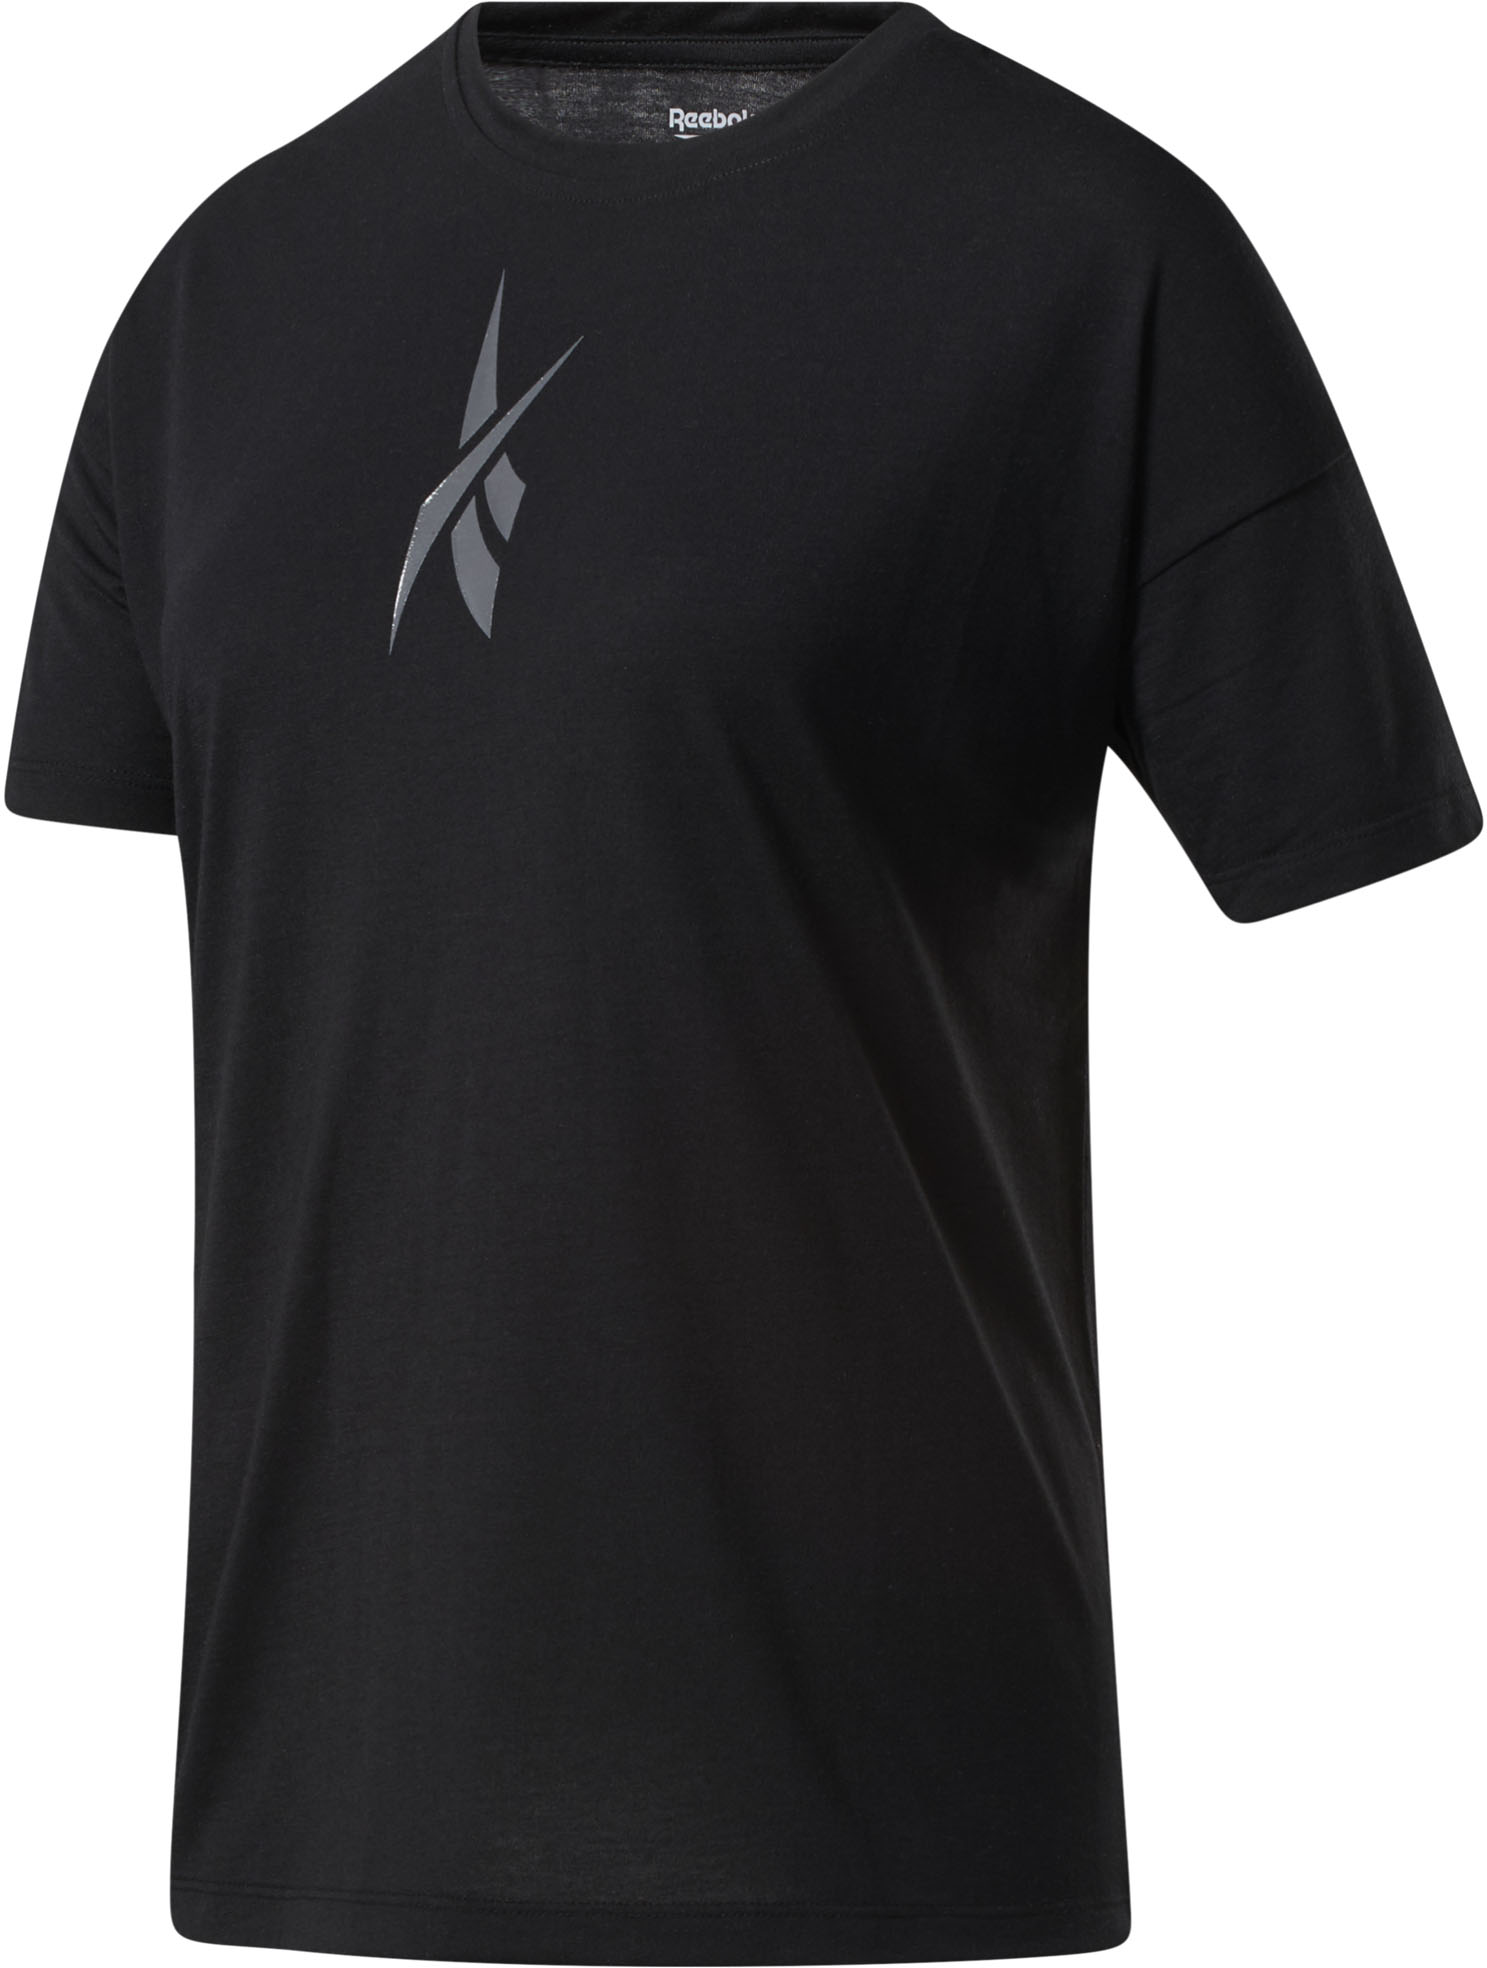 Reebok T-Shirt »GRAPHIC T-SHIRT« schwarz Größe L (42/44) M (38/40) S (34/36) XL (46/48) XS (30/32)